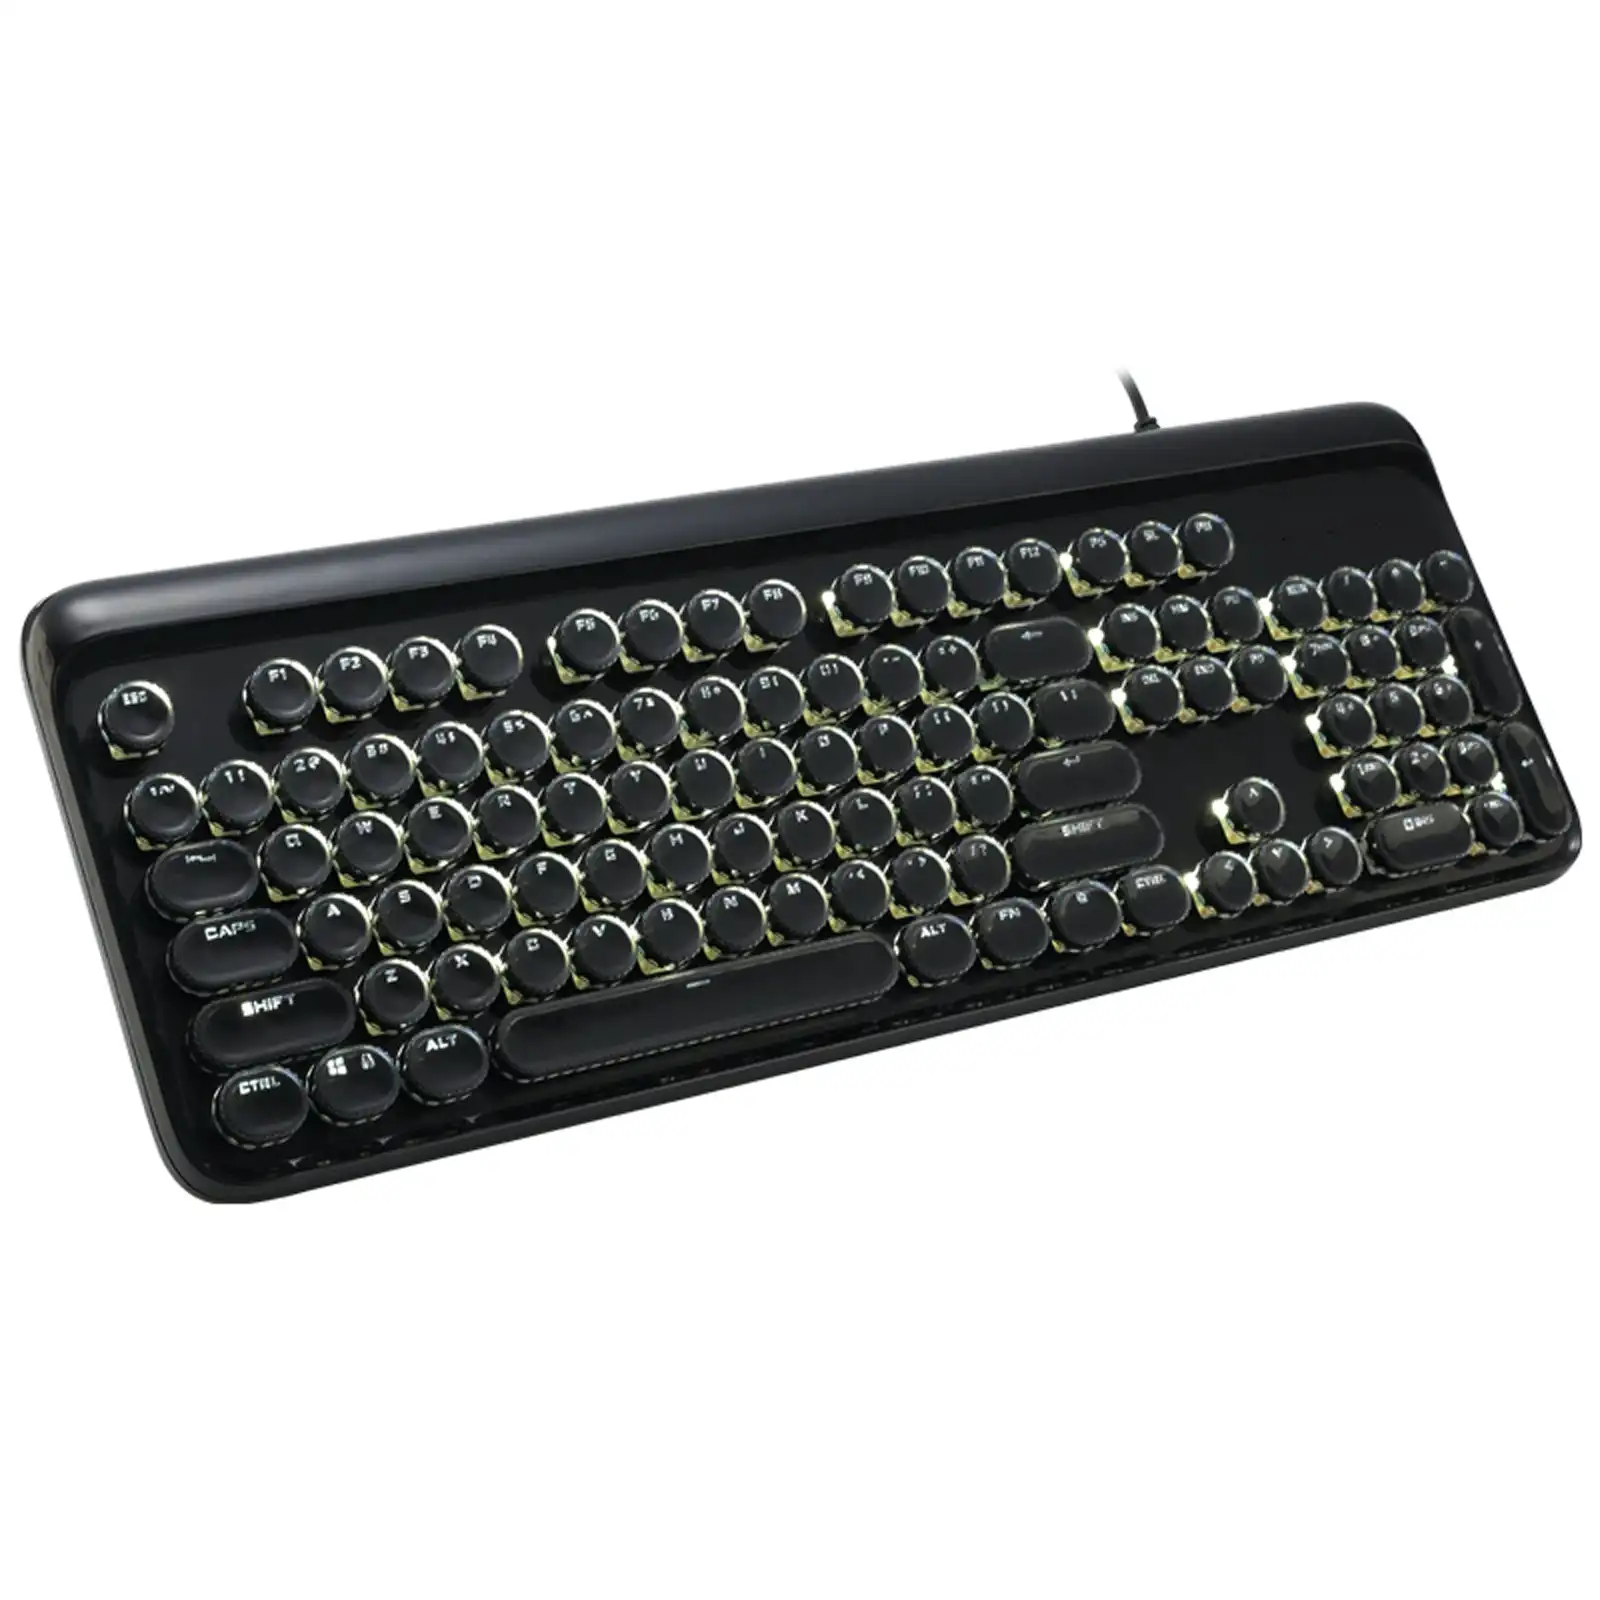 TODO Mechanical Gaming Keyboard Linear Blue Switch Led Backlit 104 Key Windows - Black